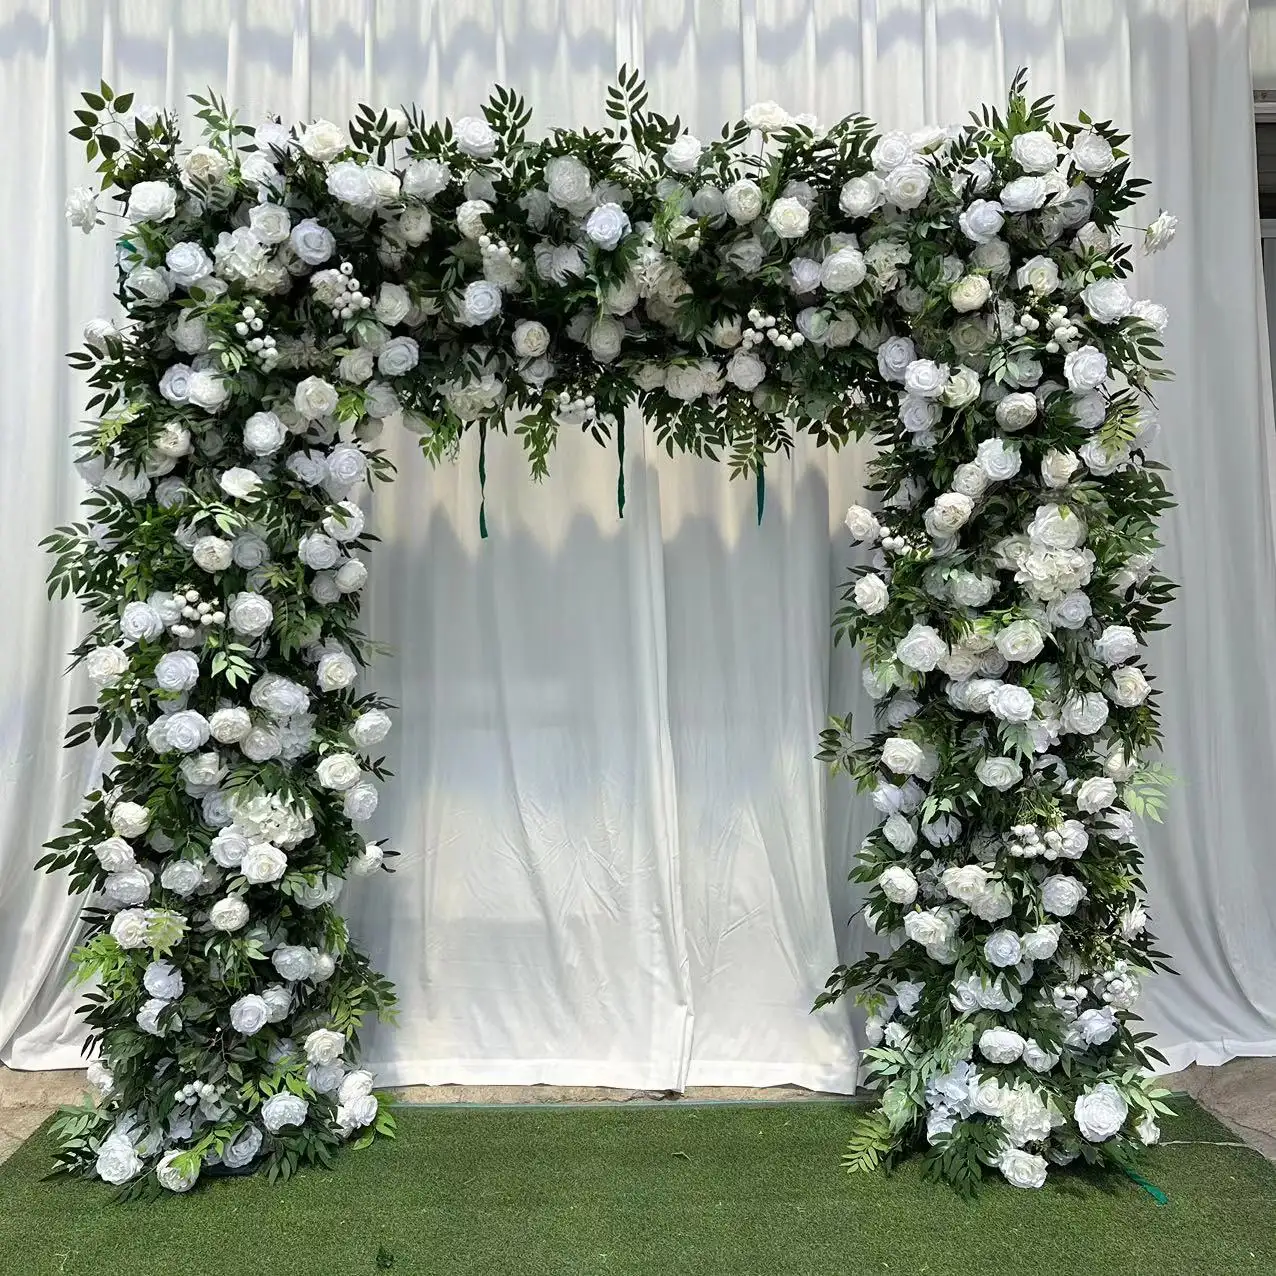 A-FSA005 Wholesale silk square flower arch backdrop fake flower arch artificial rose flower arch for wedding decoration